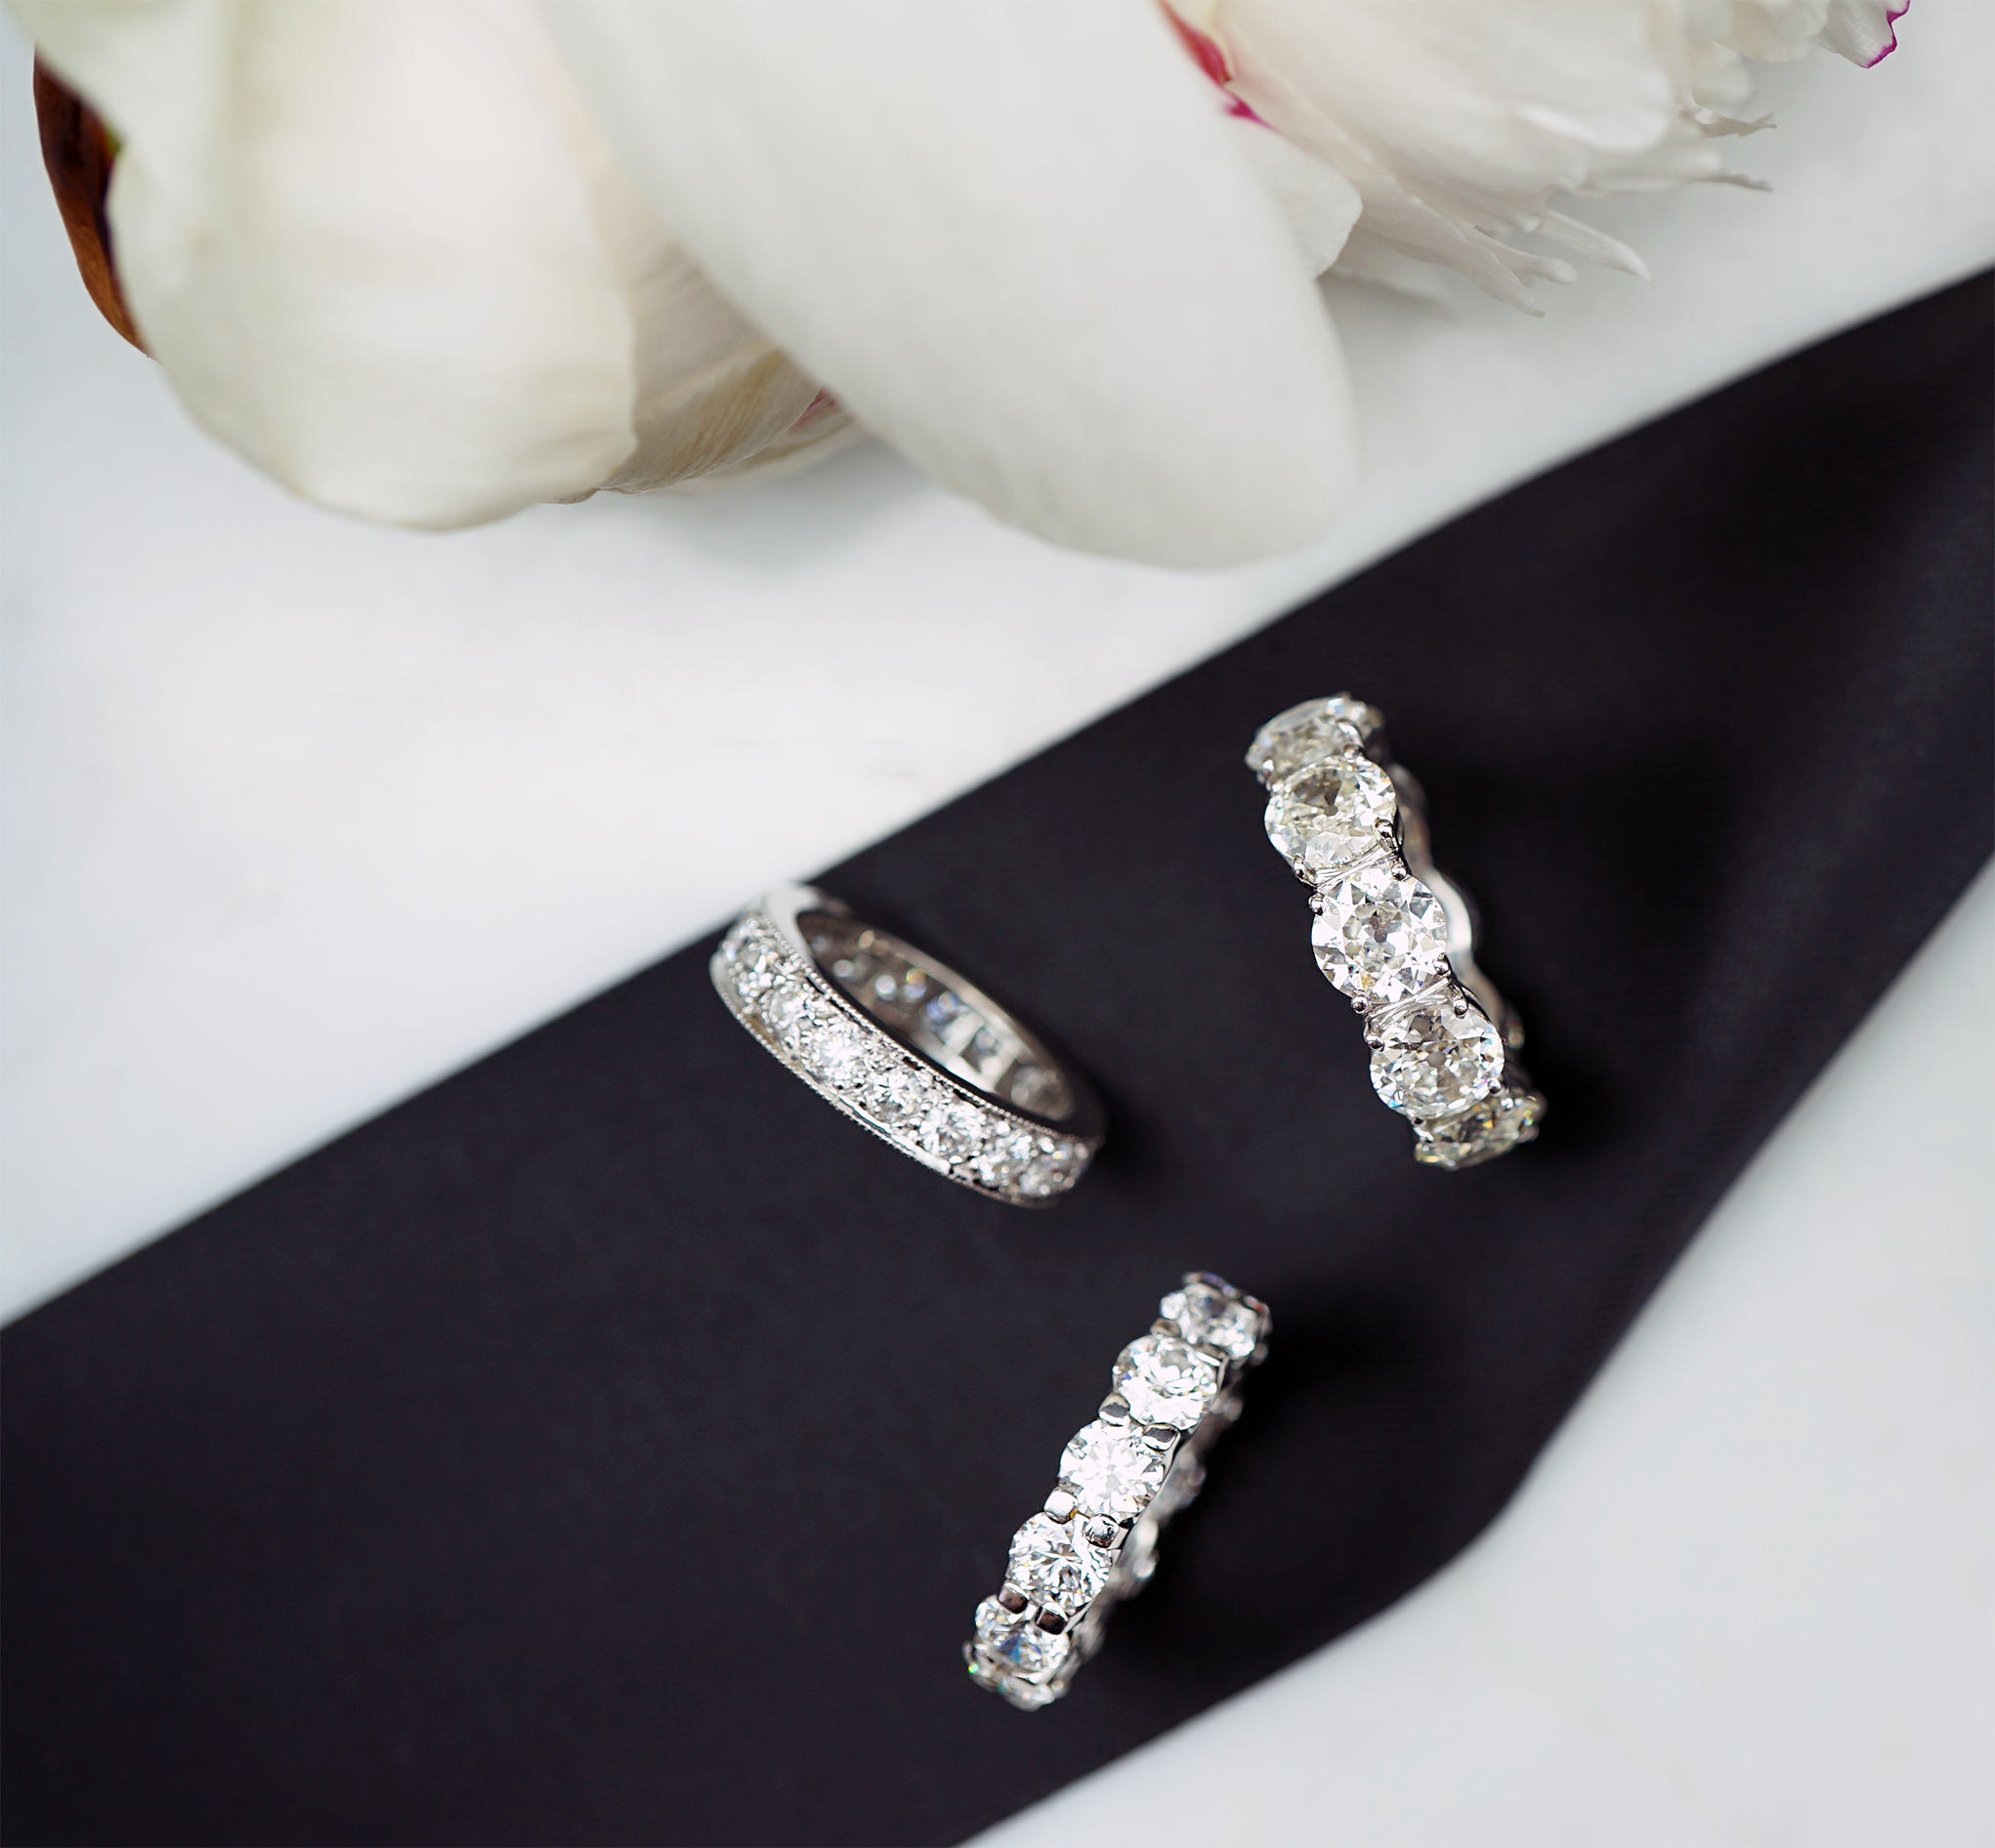 Custom Australian sapphire with a diamond band, bezel setting with a subtle  milgrain : r/EngagementRings